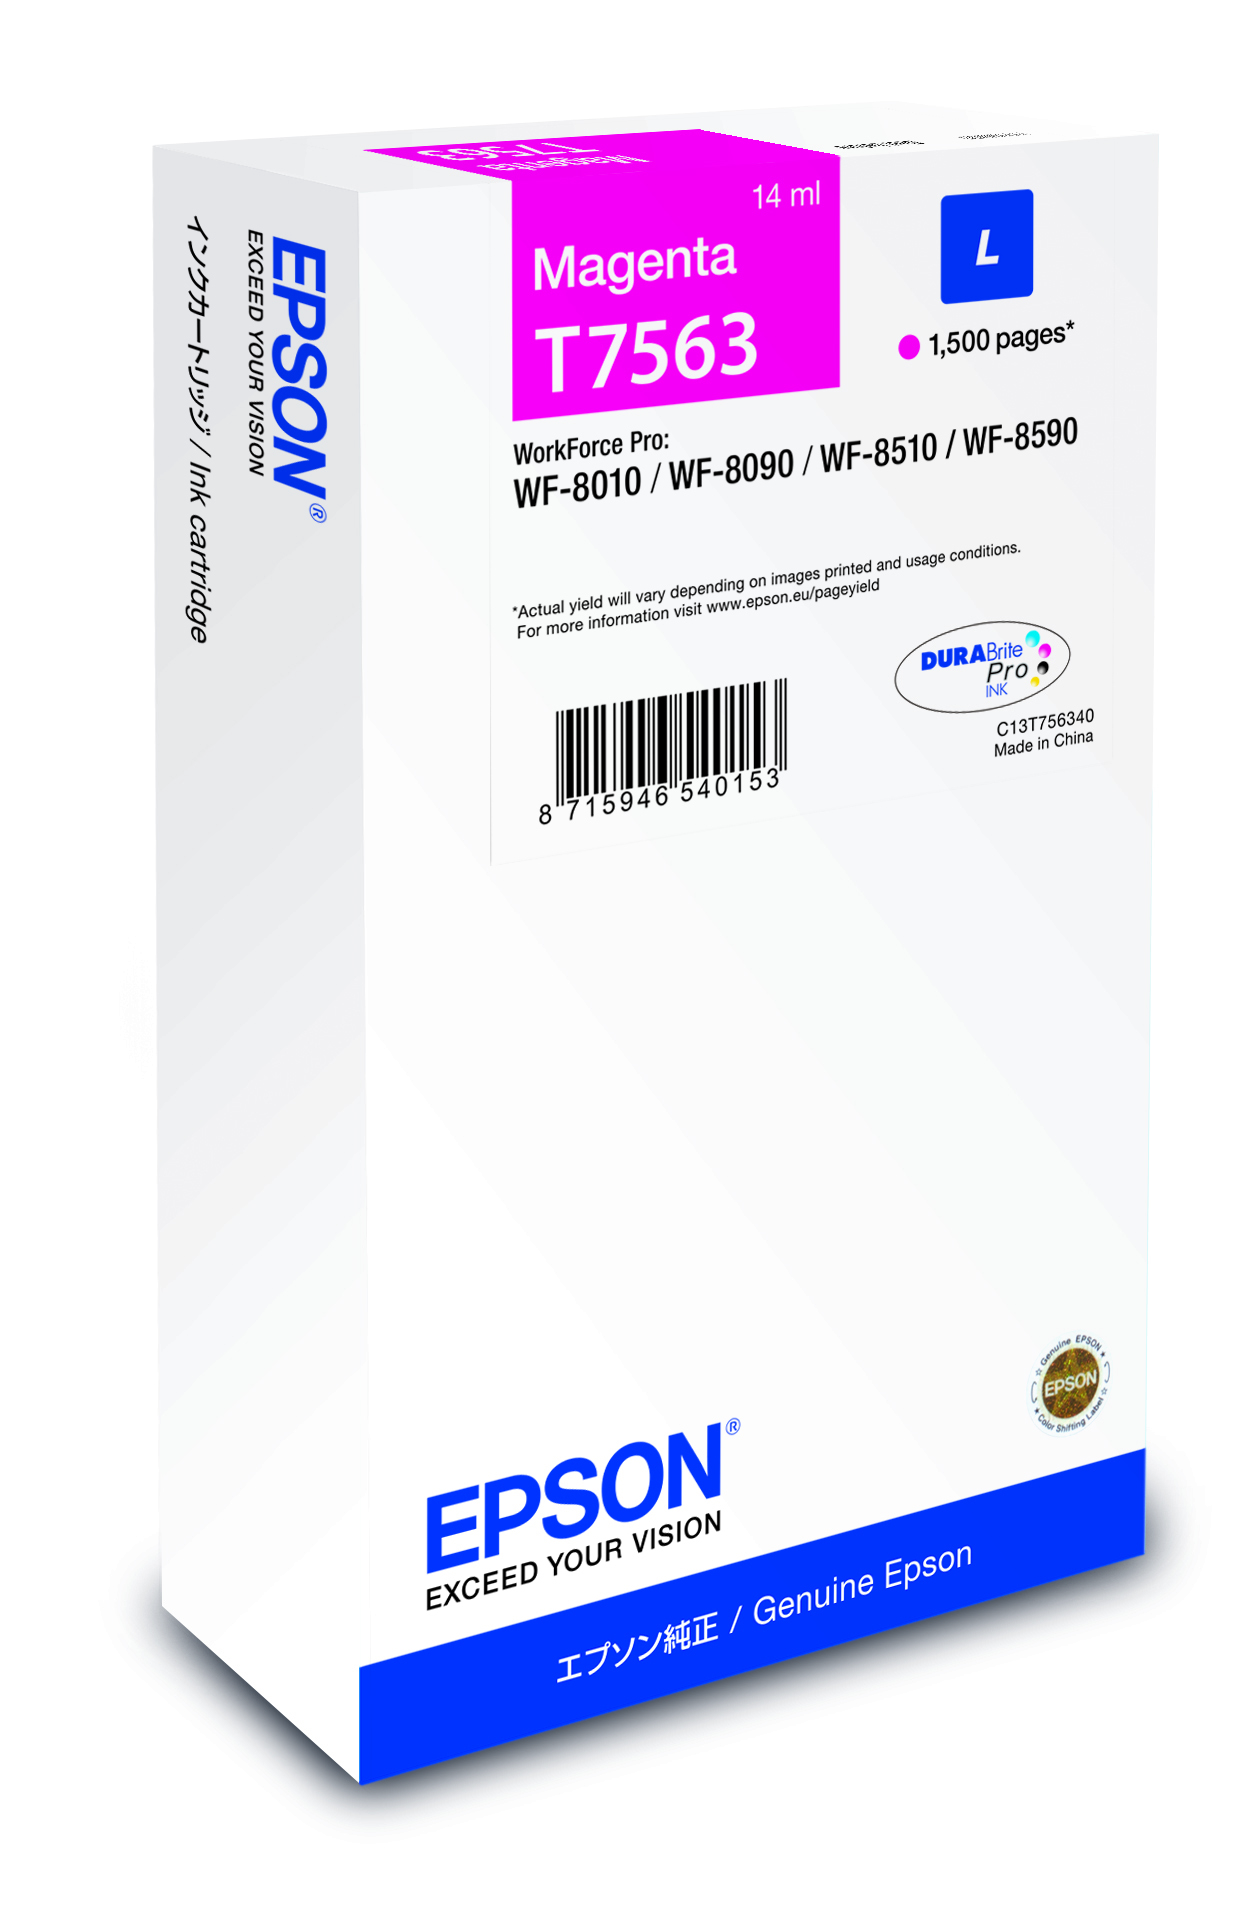 Epson Ink Cartridge L Magenta single pack / magenta